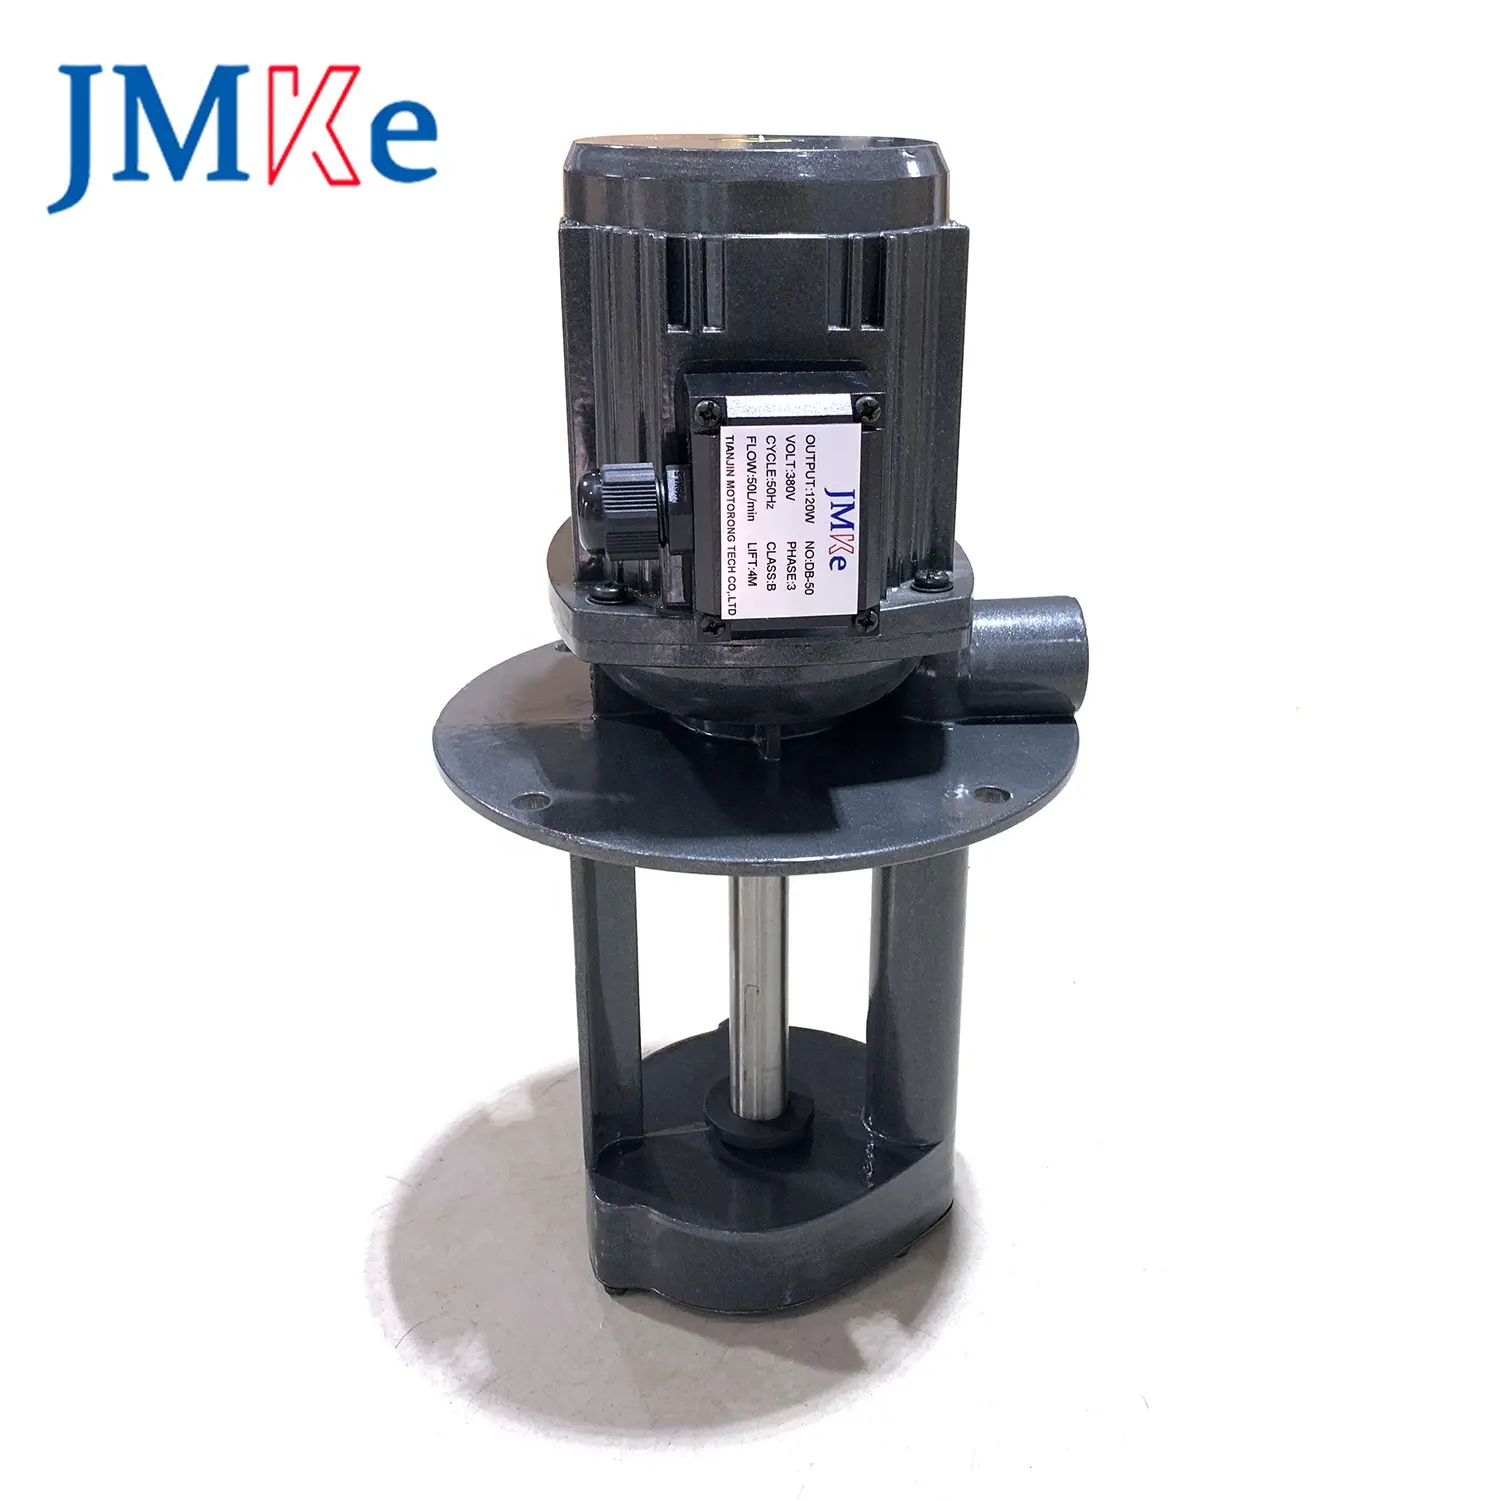 Jmke DB-50 120w cabeça elétrica 4m latling bomba refrigerante vertical axial